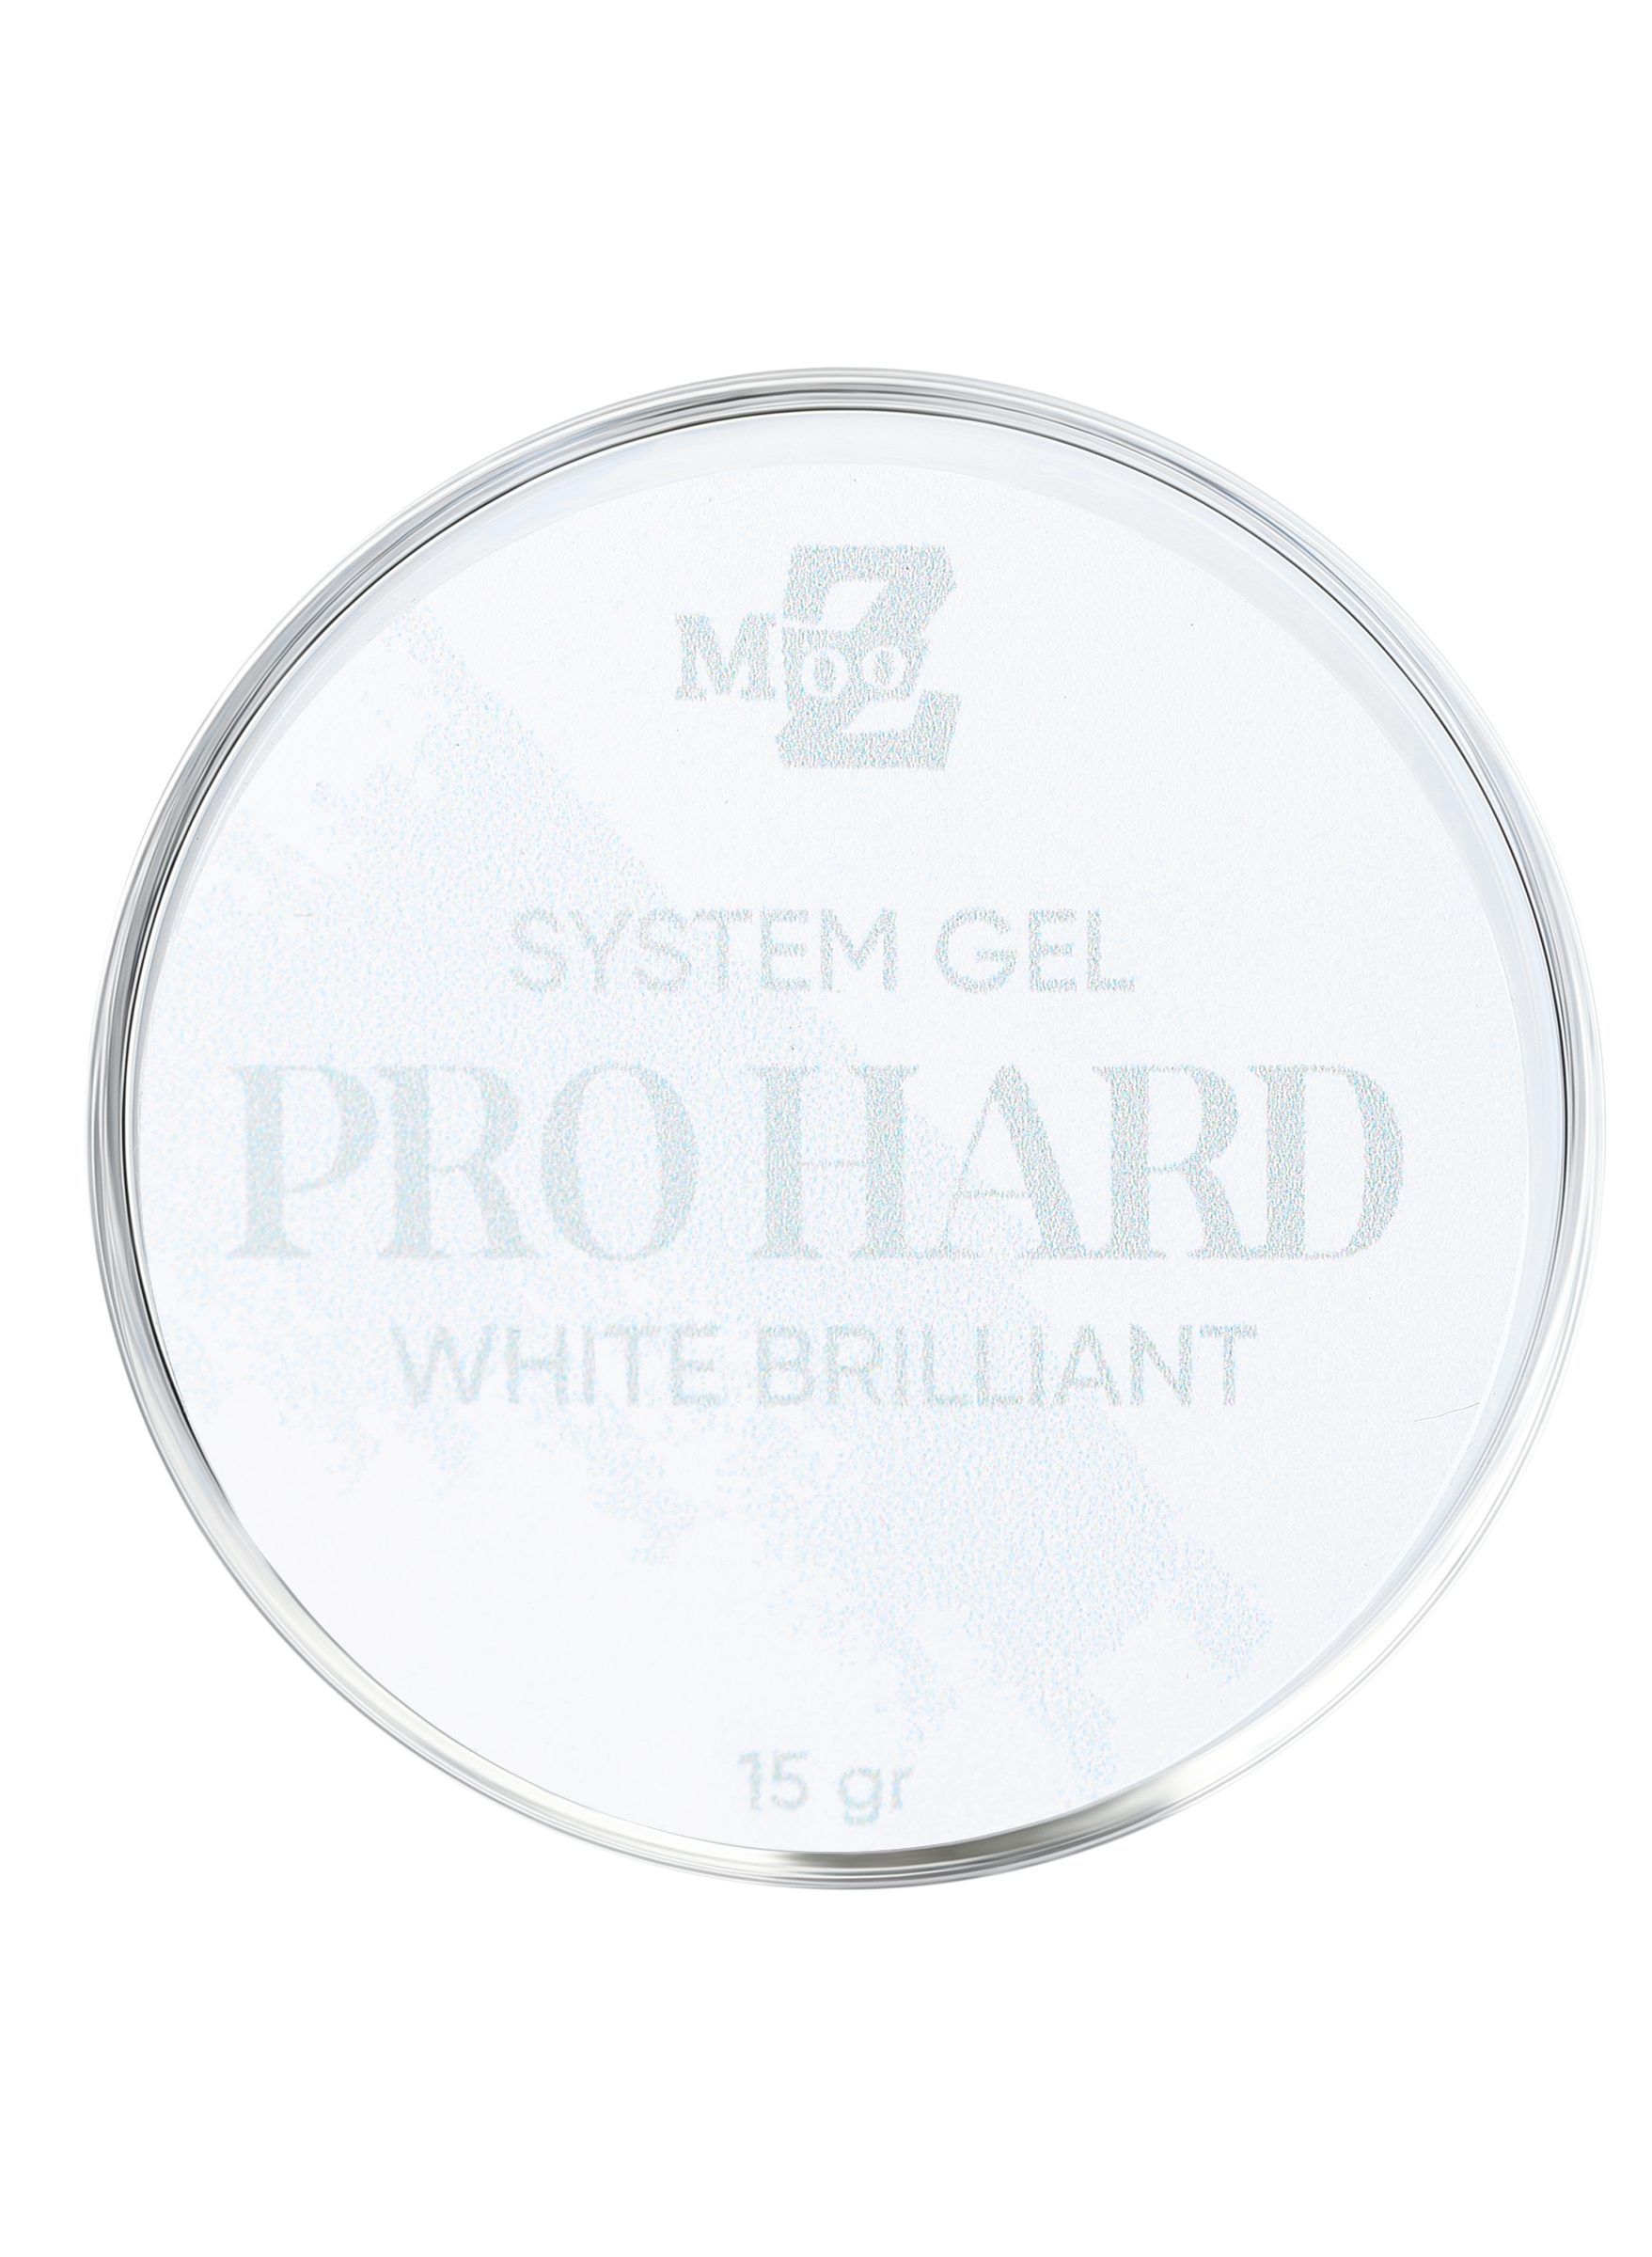 Гель для ногтей MOOZ Pro Gel White Brilliant наращивание моделирующий молочный 15 мл